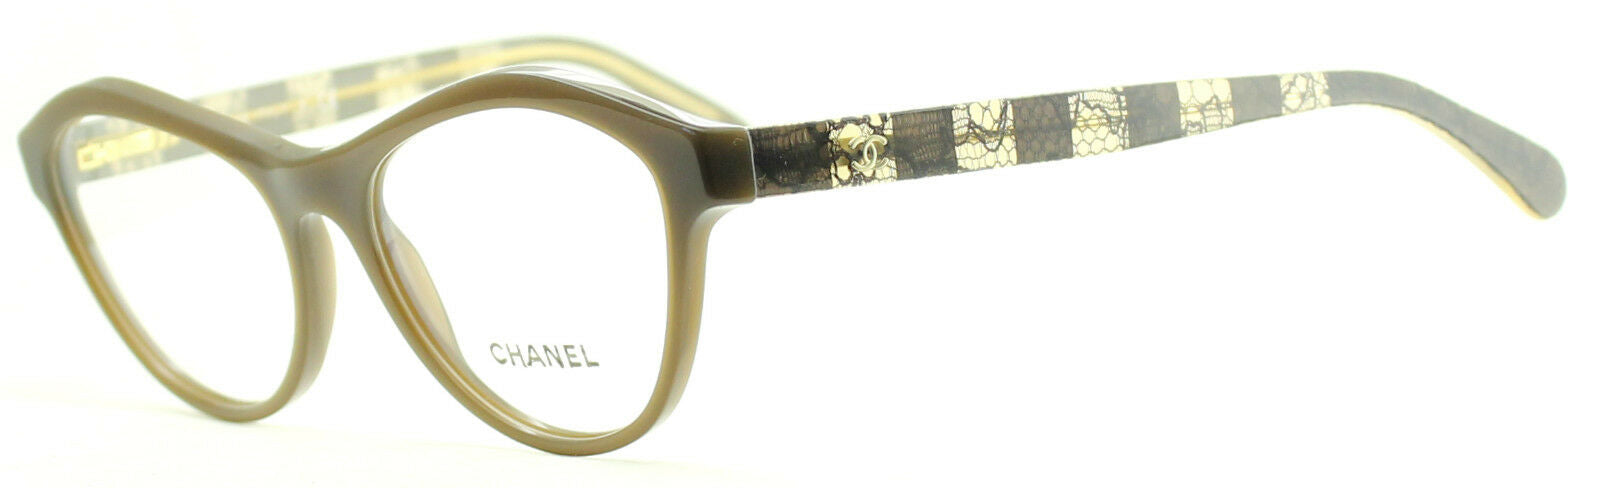 CHANEL 3291 c.1484 Eyewear FRAMES Eyeglasses RX Optical Glasses